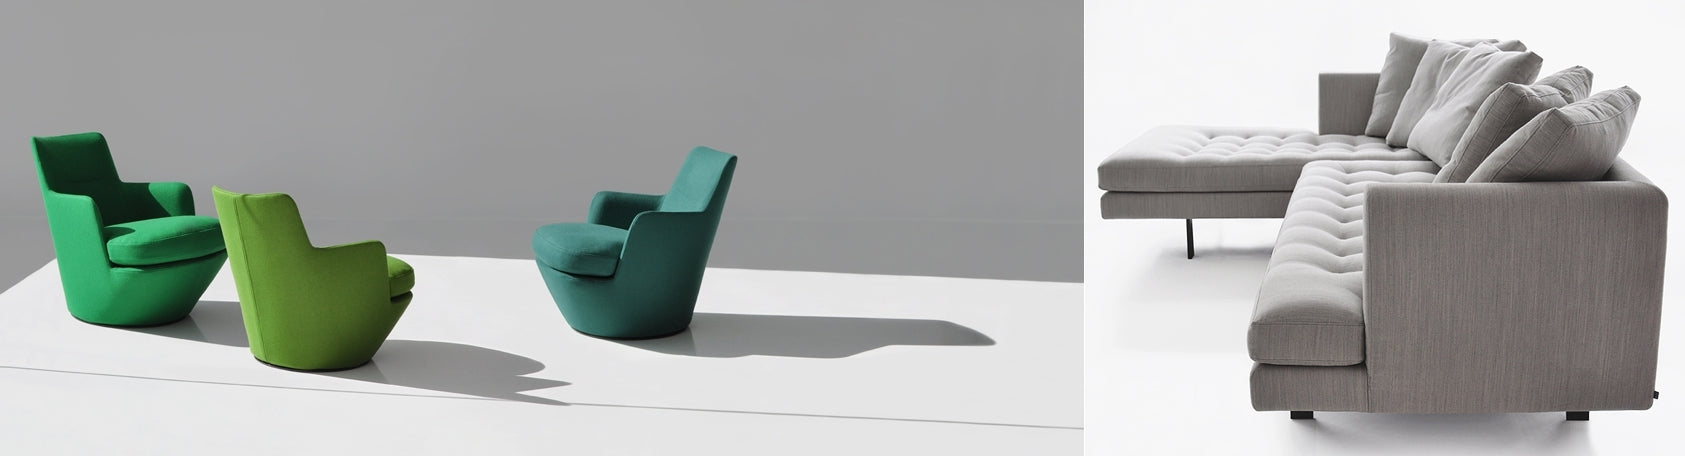 Bensen Soft Square Tagged Bensen Lounge Chair